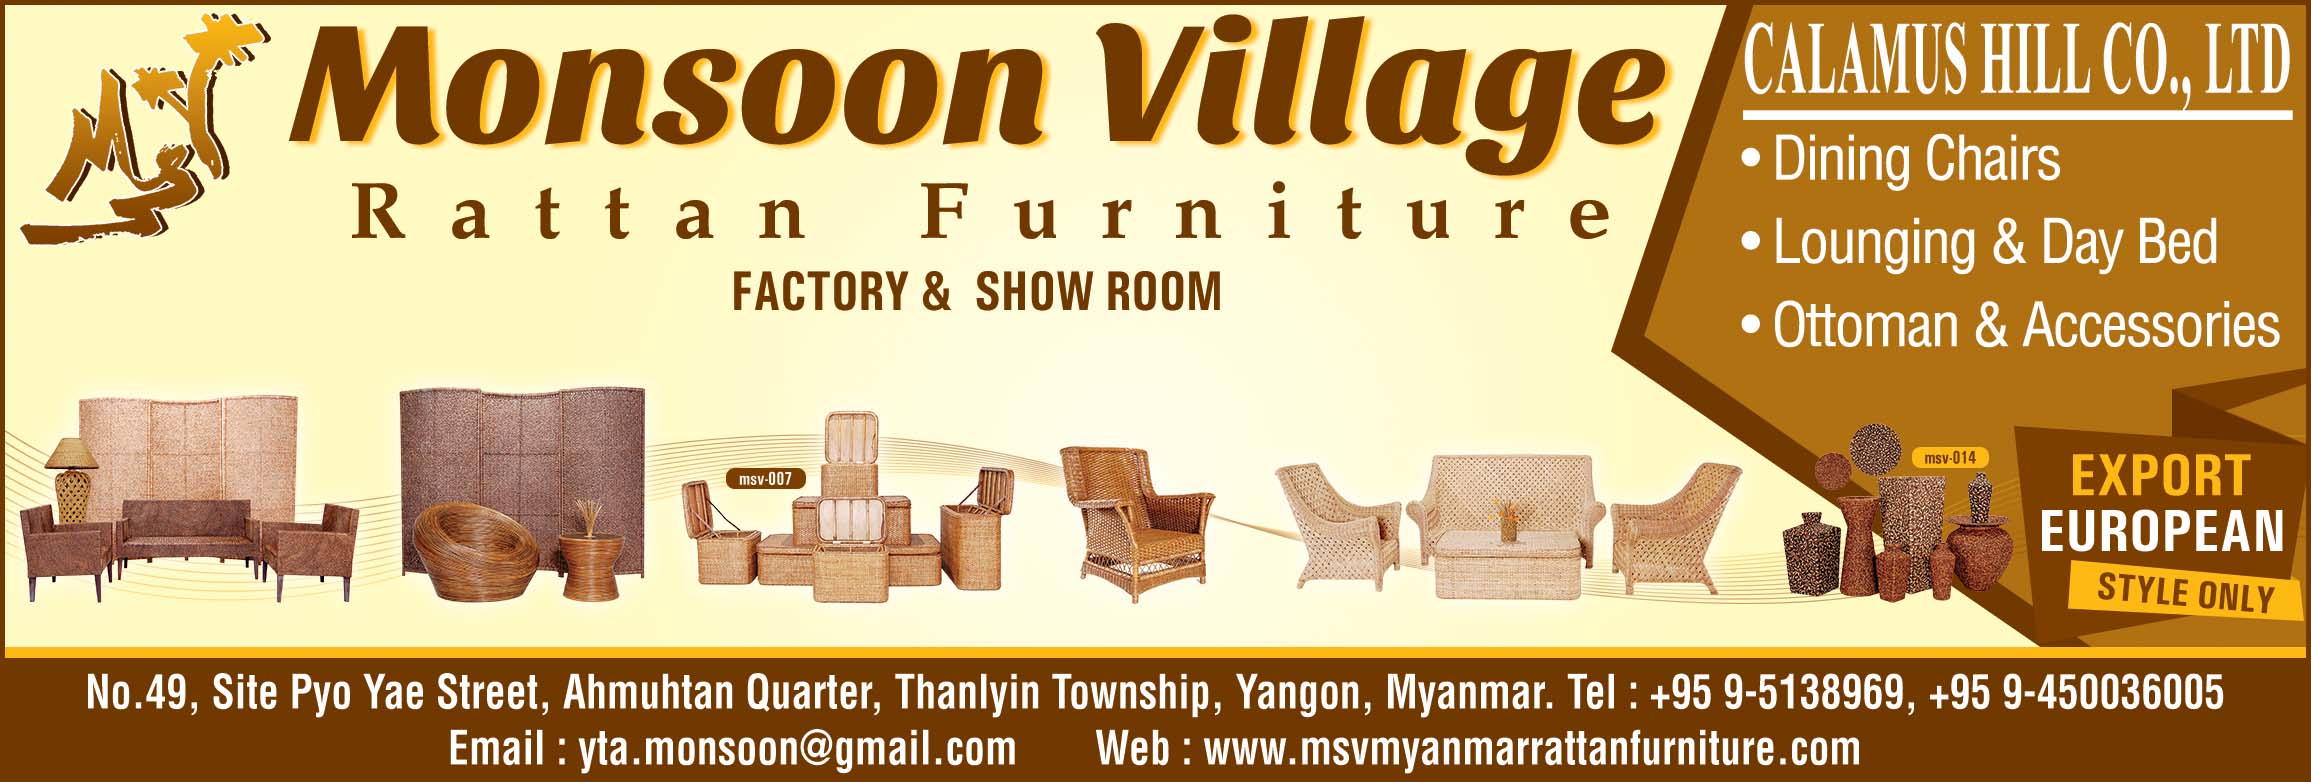 Monsoon Village Rattan Furniture (Calamus Hill Co., Ltd.)